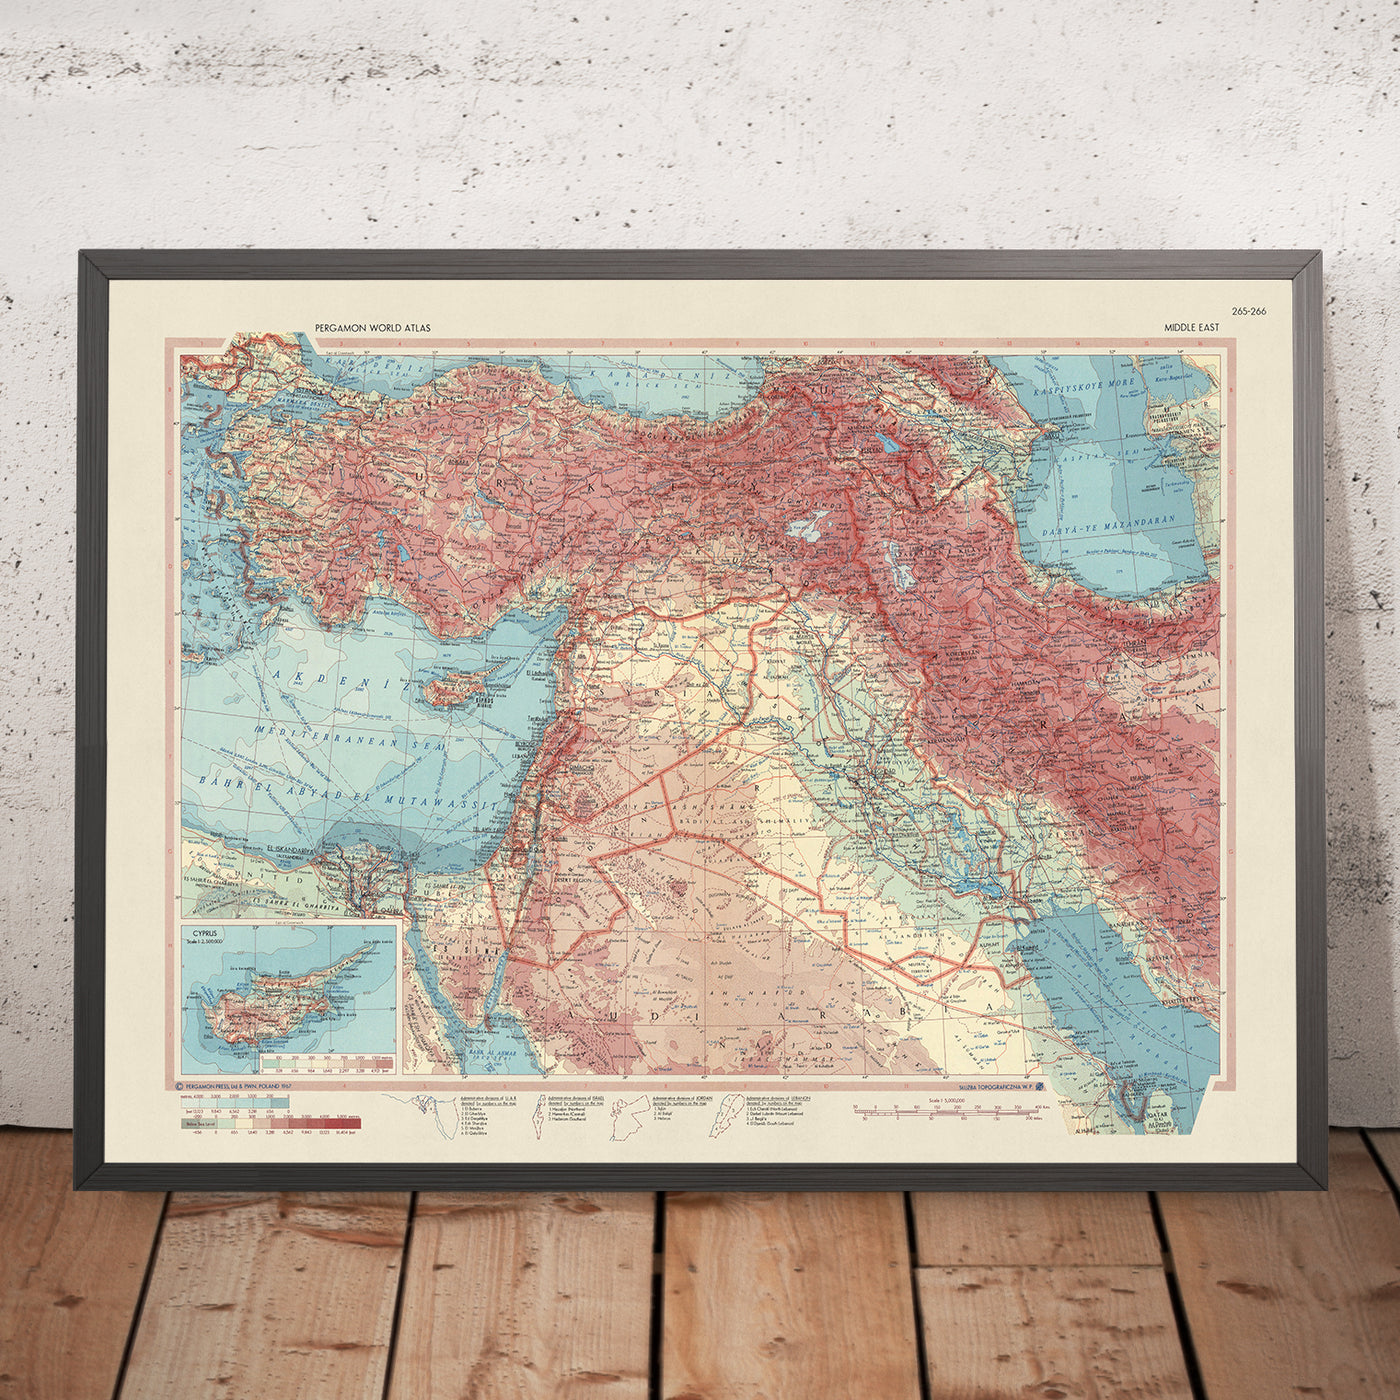 Old Map of the Middle East, 1967: Turkey, Iran, Iraq, Cyprus, Israel, Jordan